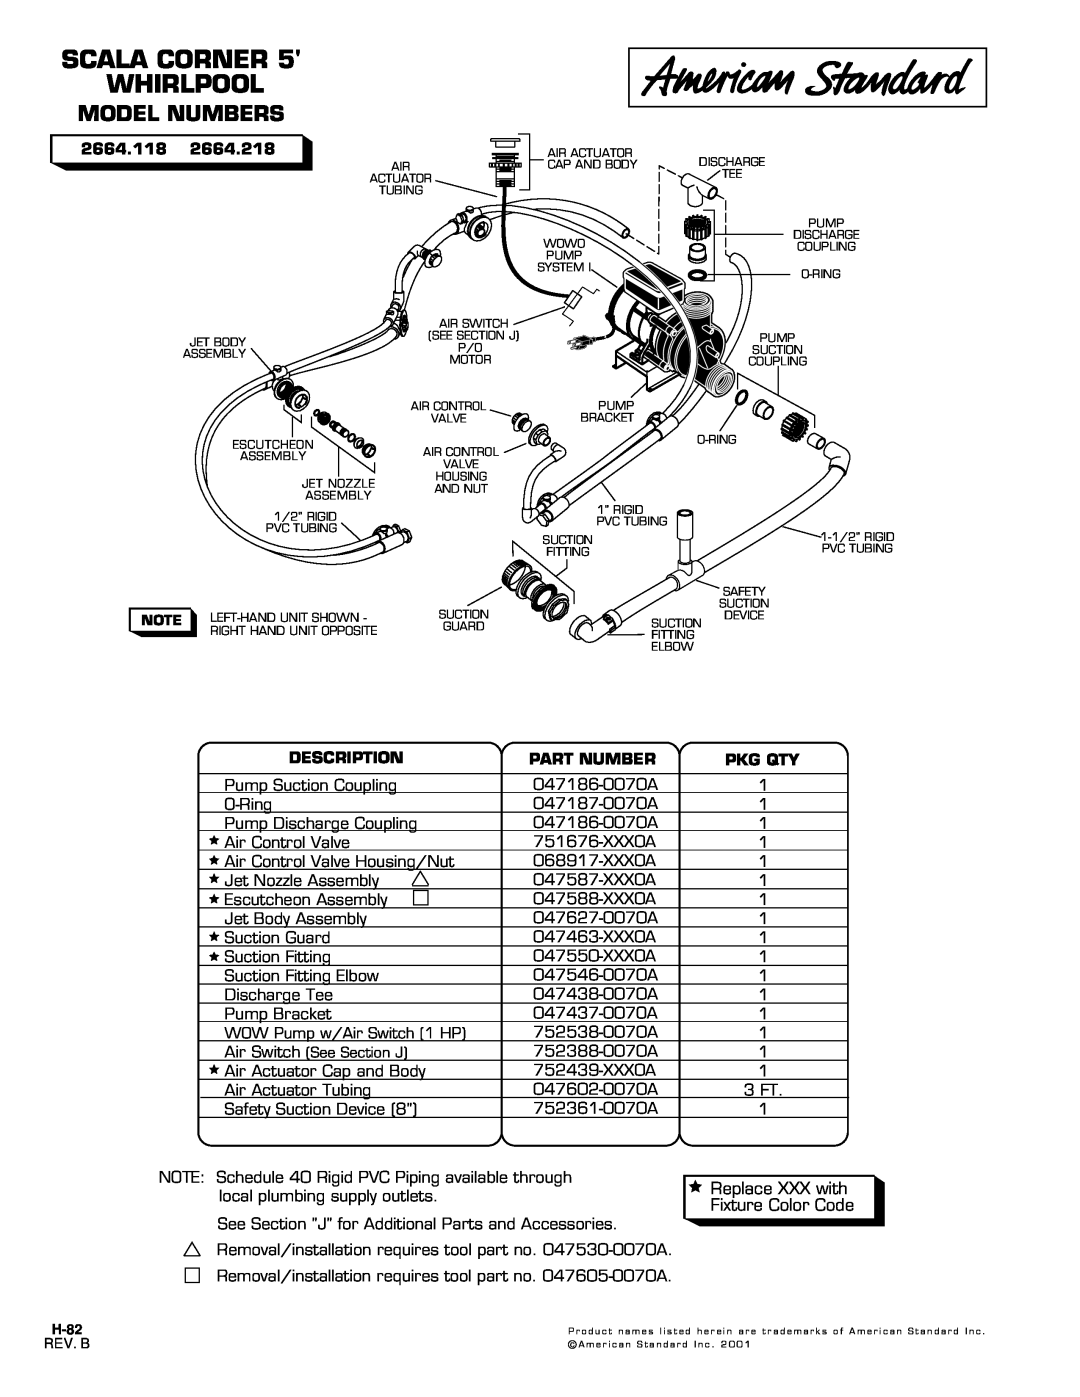 American Standard 751676-XXX0A manual Scala Corner Whirlpool, Model Numbers, 2664.118, 2664.218, Description, Part Number 